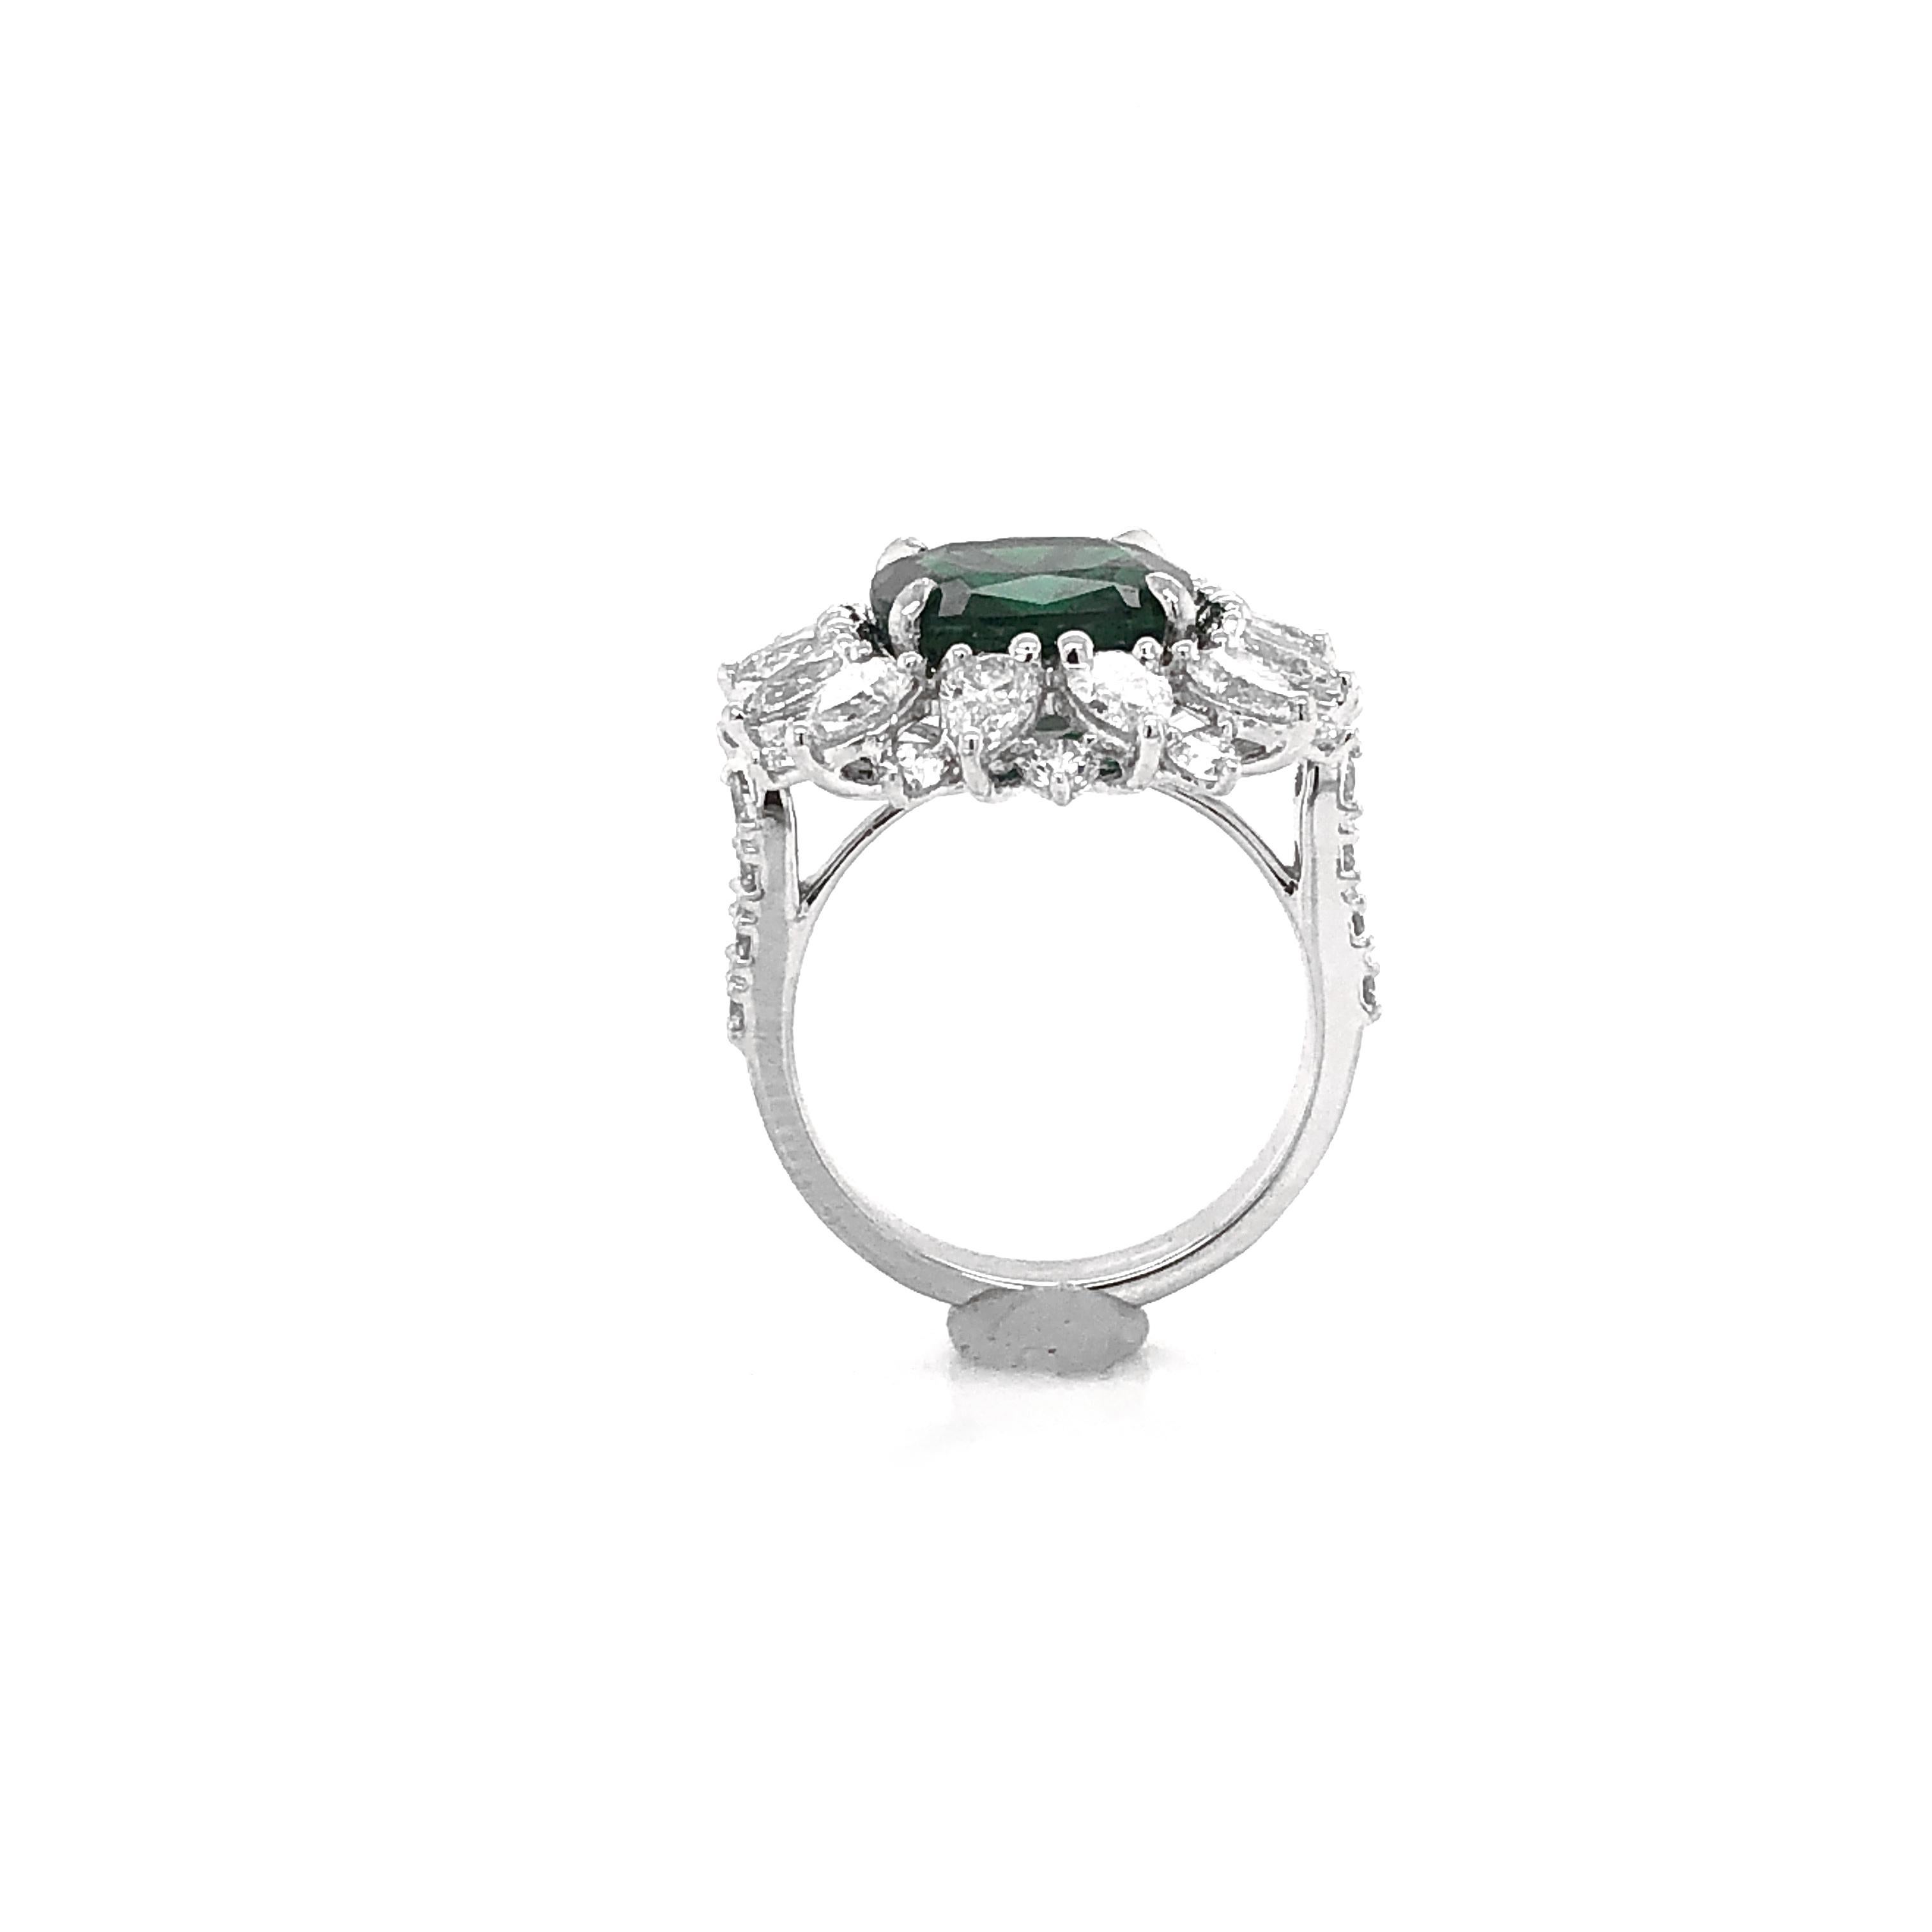 Certified Zambian Cushion Cut Emerald 3.13 Carat Diamond Platinum Cocktail Ring For Sale 2